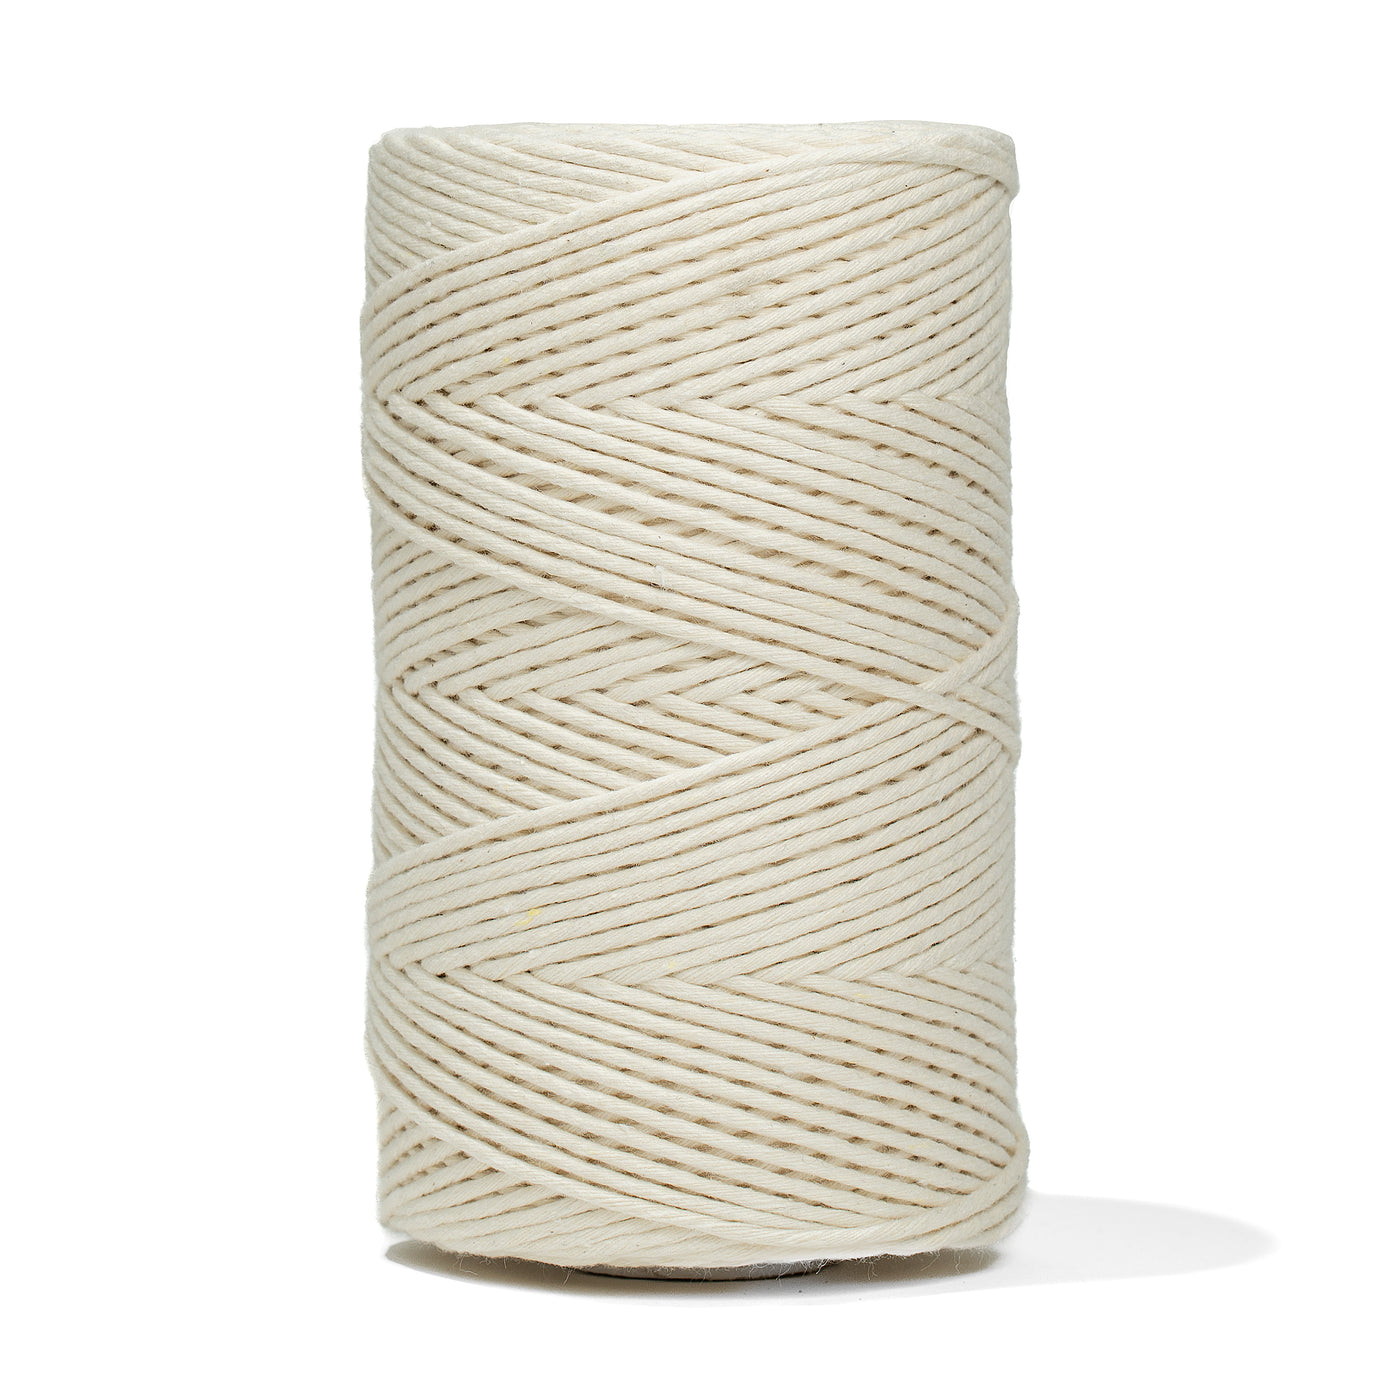 Acrylic Cord Knitting, Cords Knitting Knits, Rope Crochet, 0 Acrylic Rope